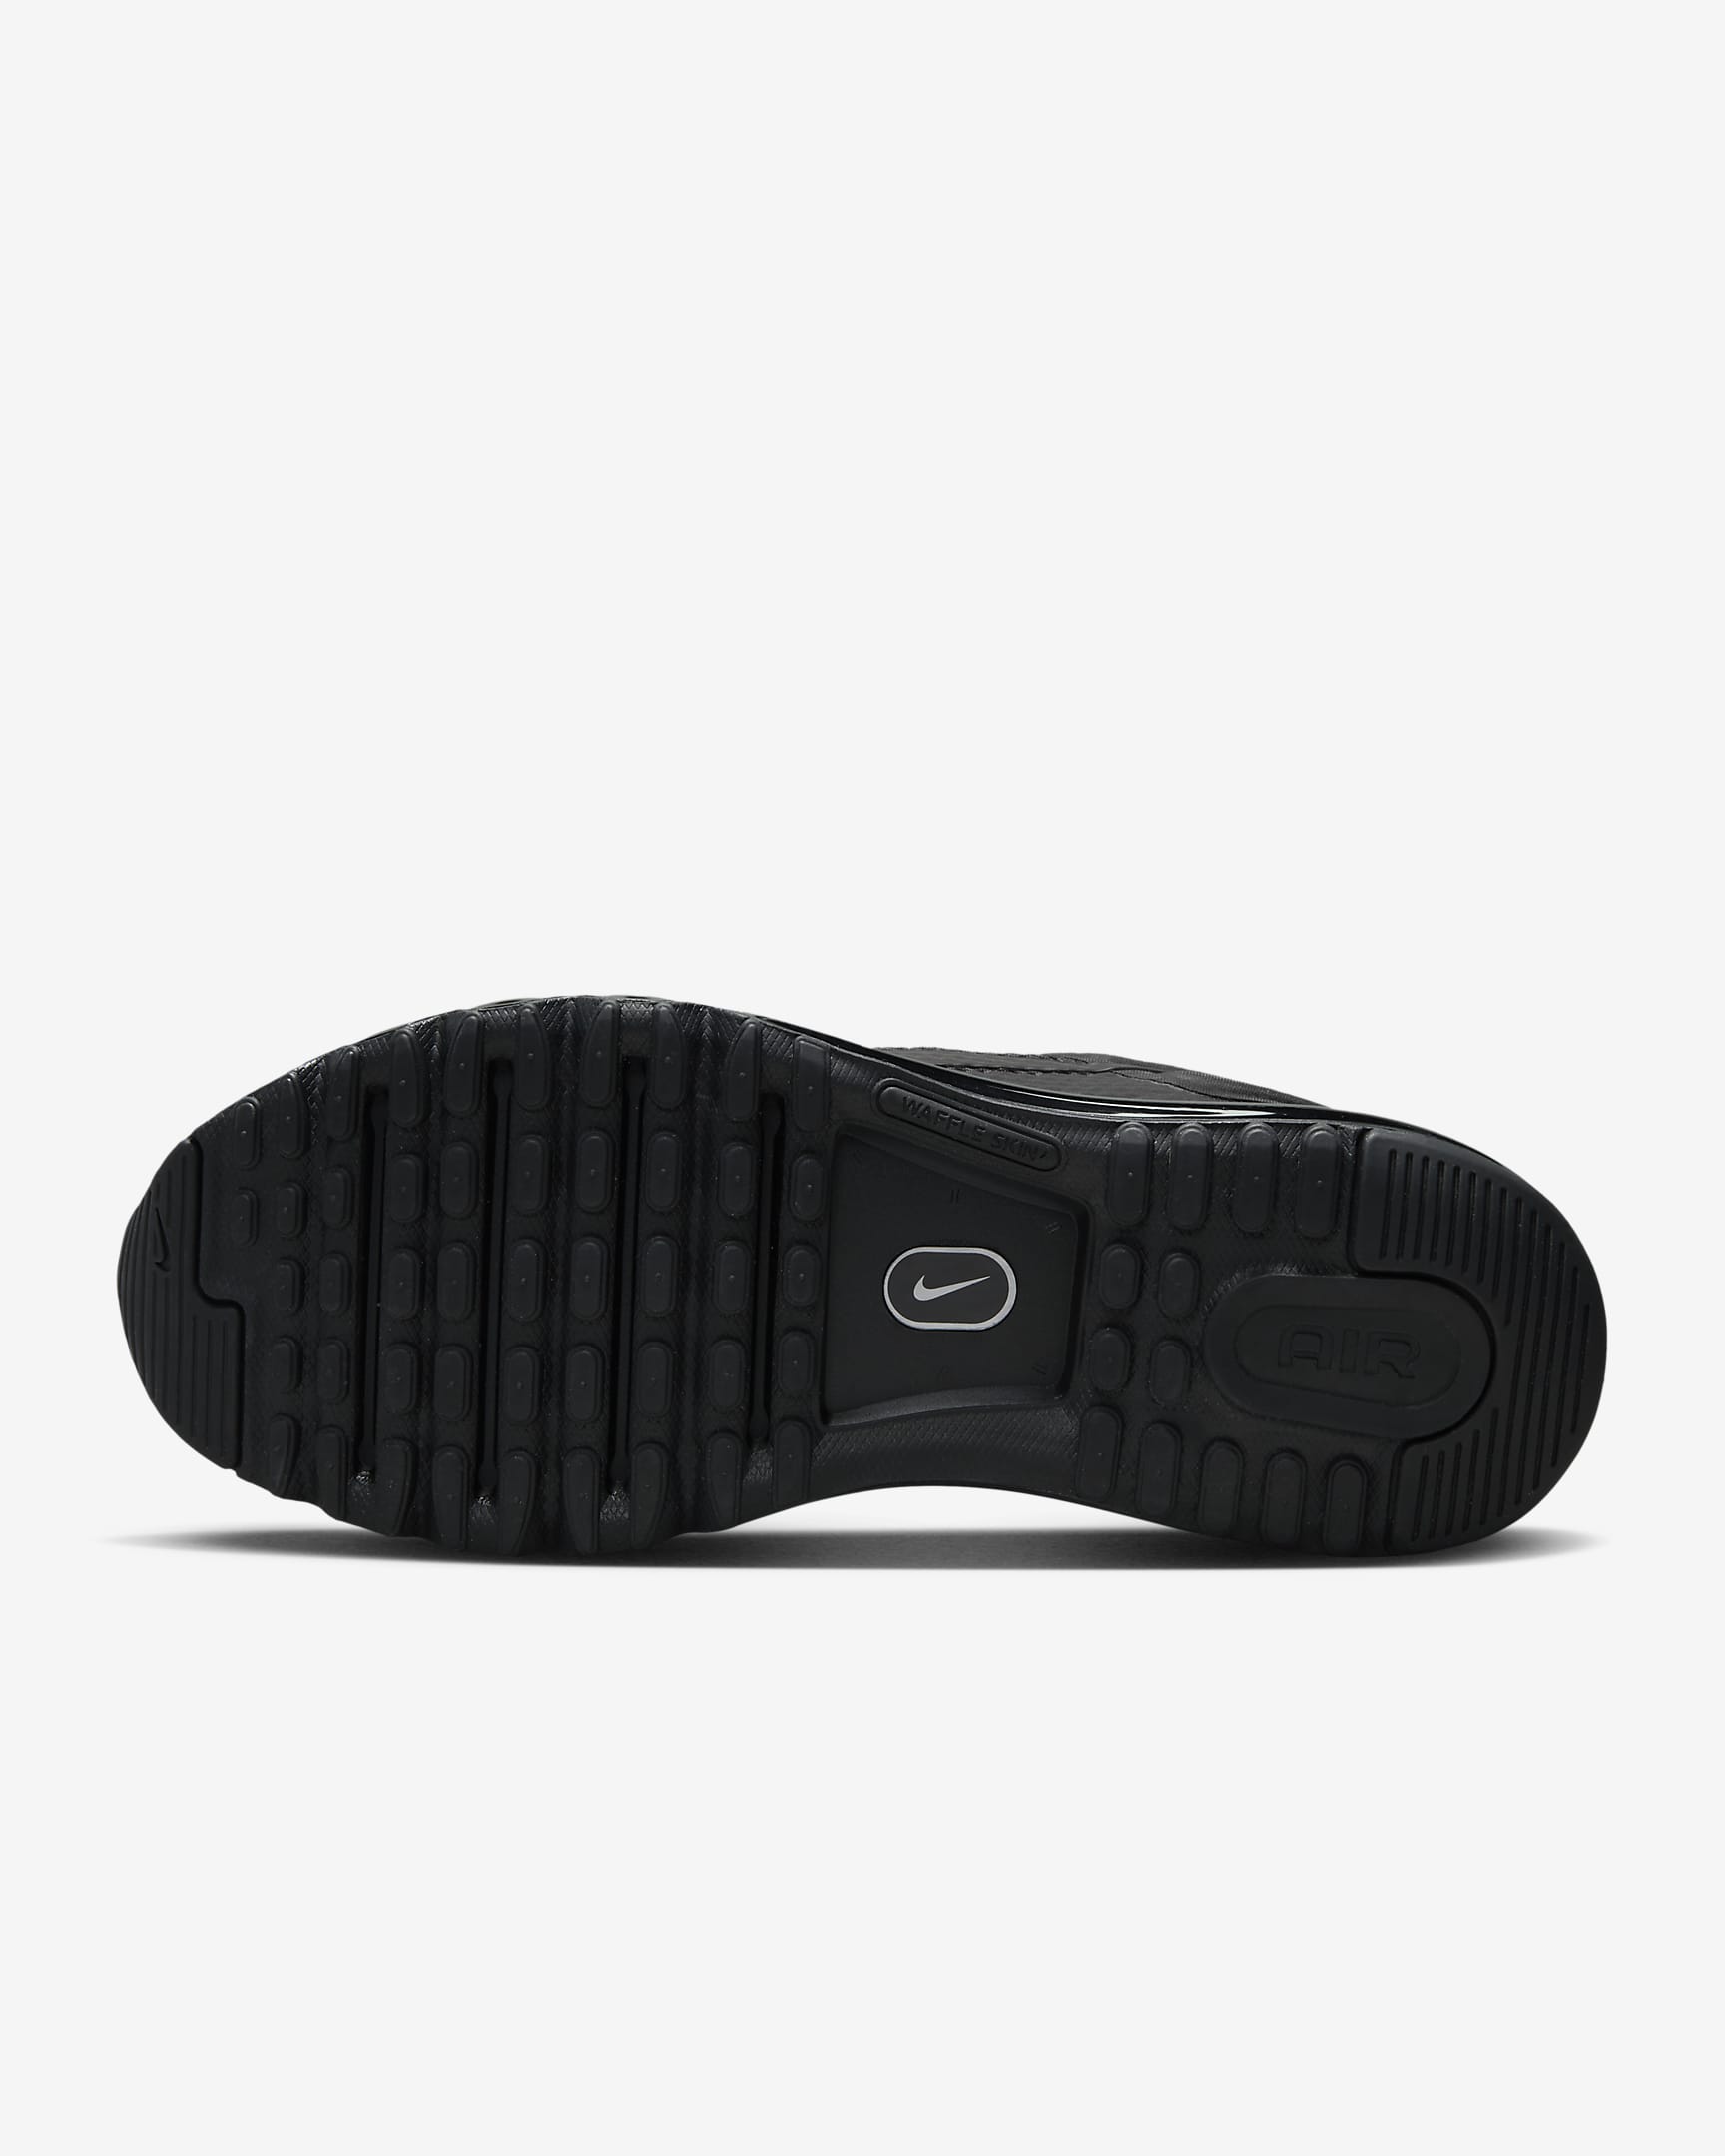 Nike Air Max 2013 Men's Shoes - Black/Black